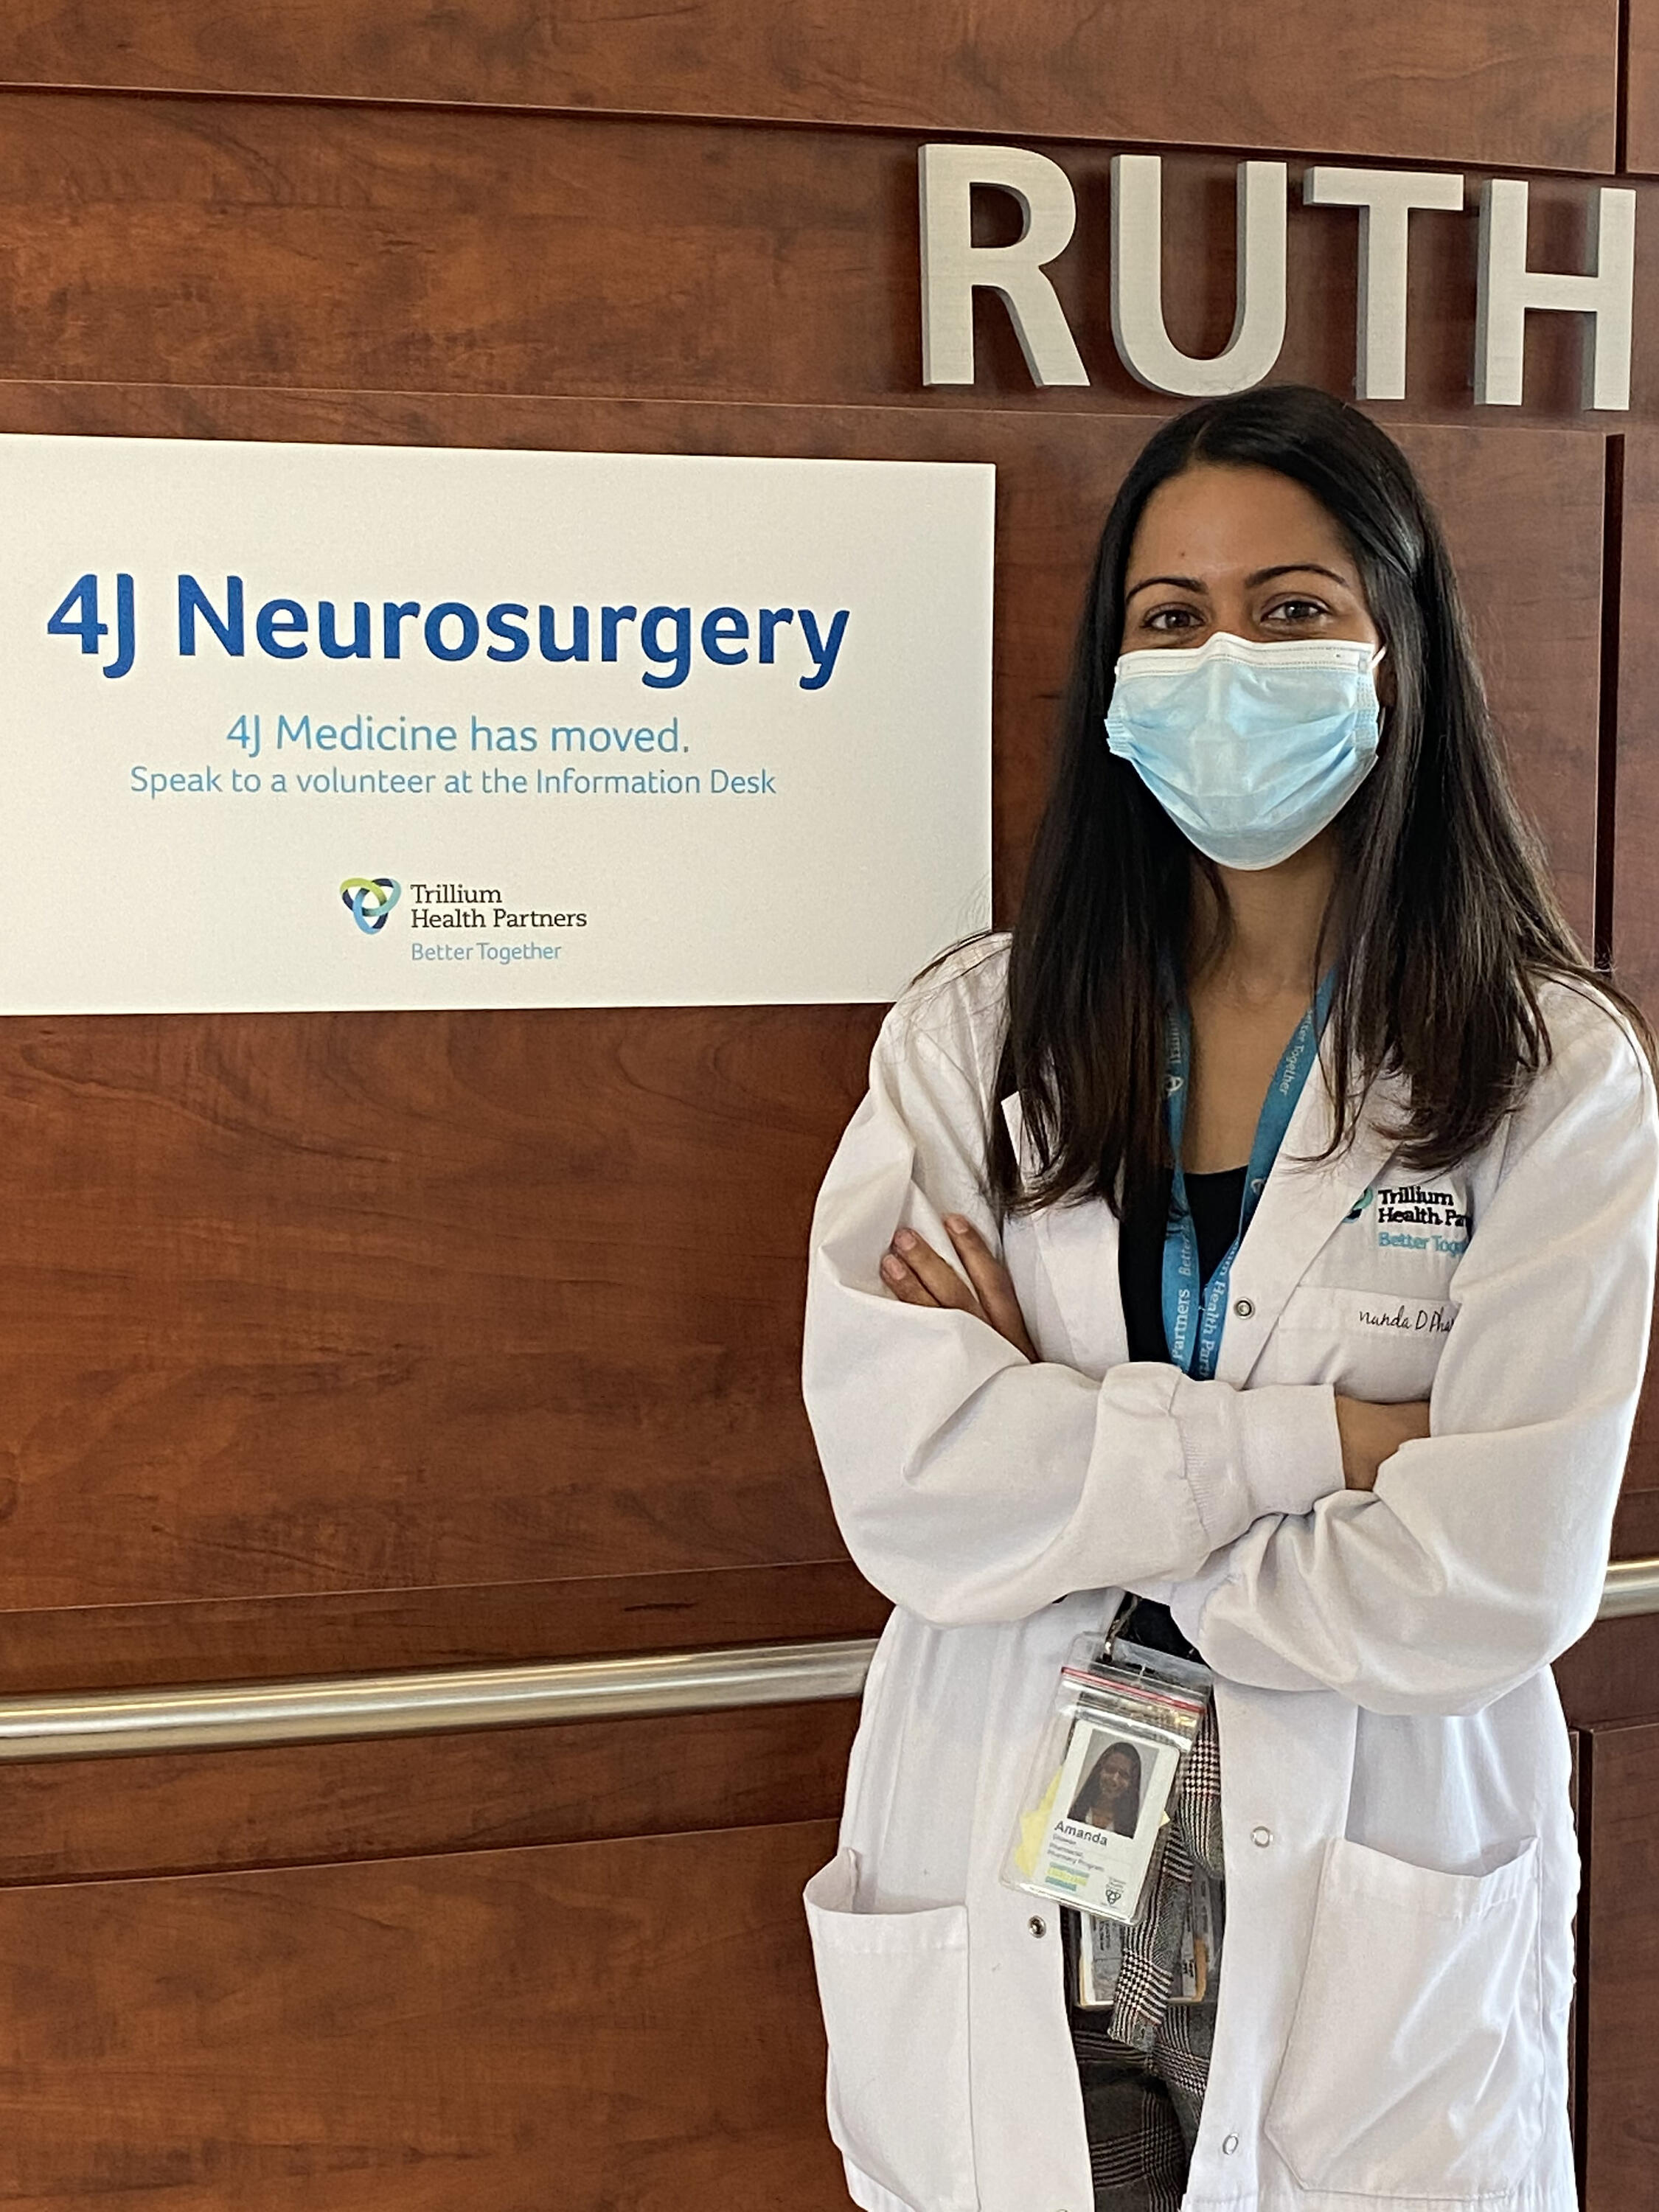 Amanda Dhawan wearing a mask and lab coat next to a neursurgery sign